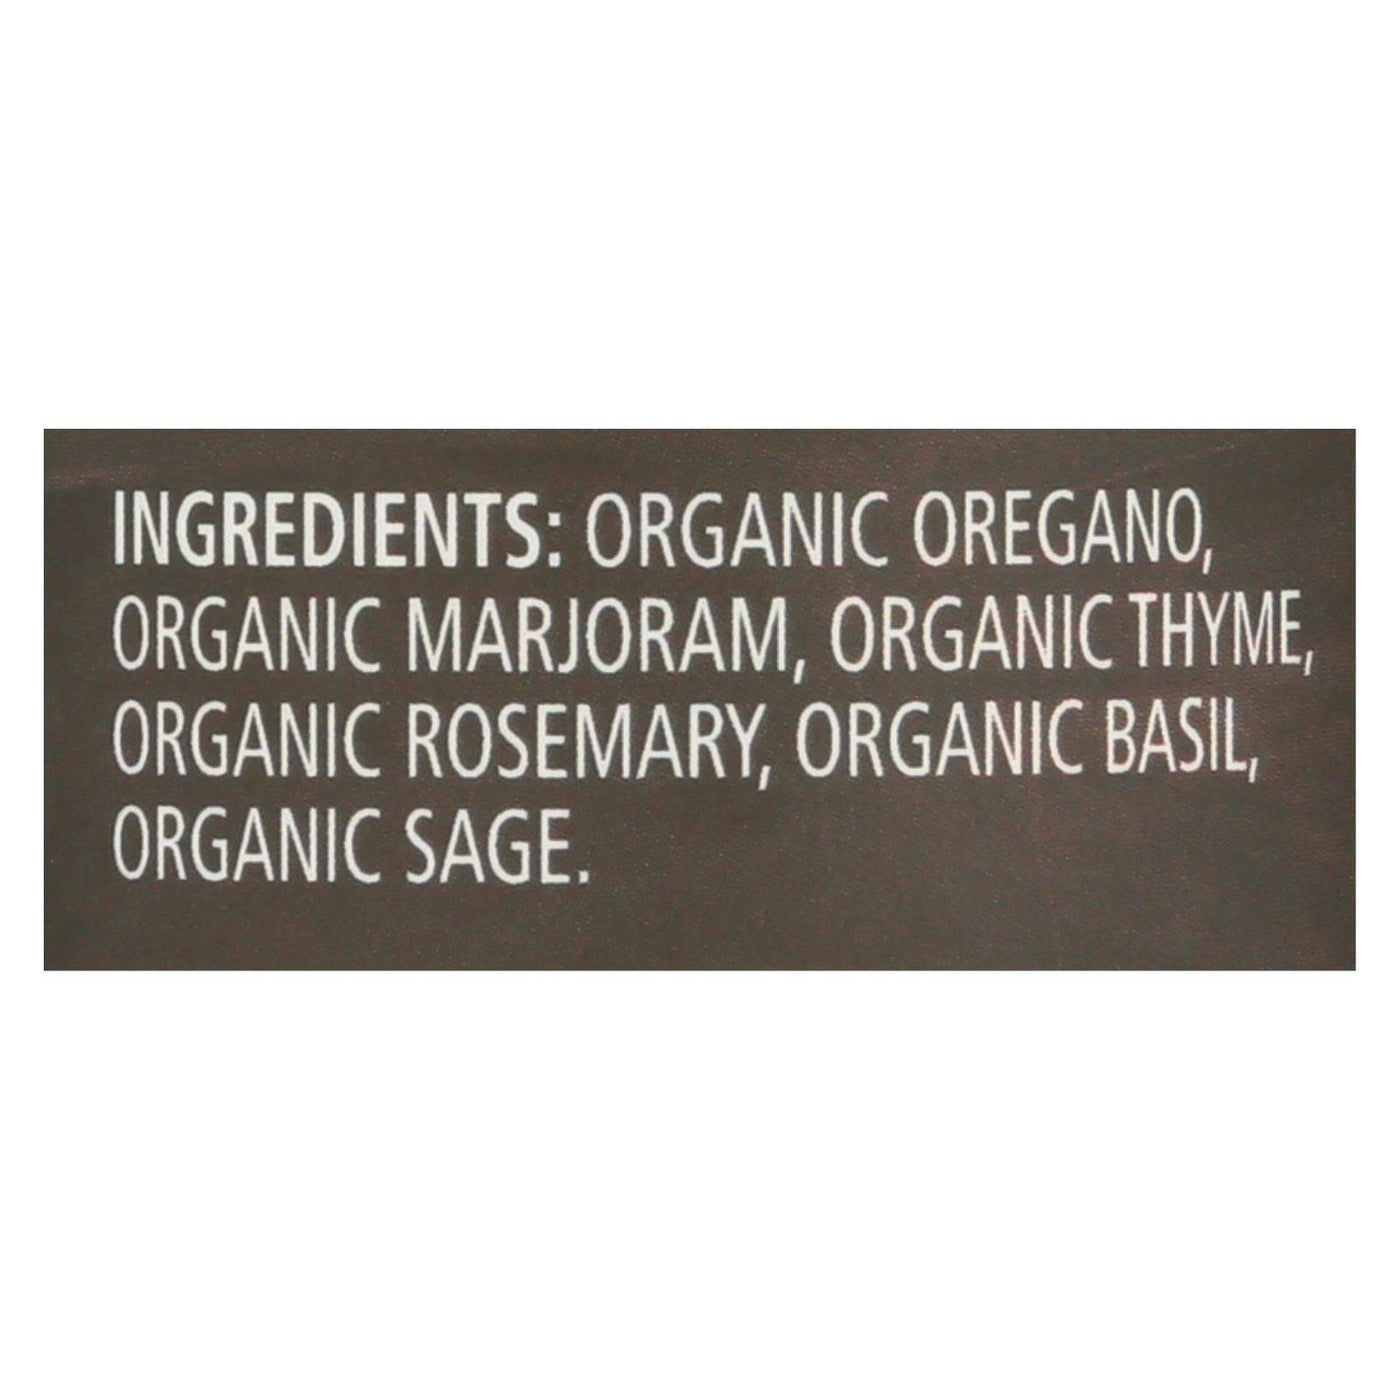 Frontier Herb Italian Seasoning Blend - Organic - .64 Oz | OnlyNaturals.us